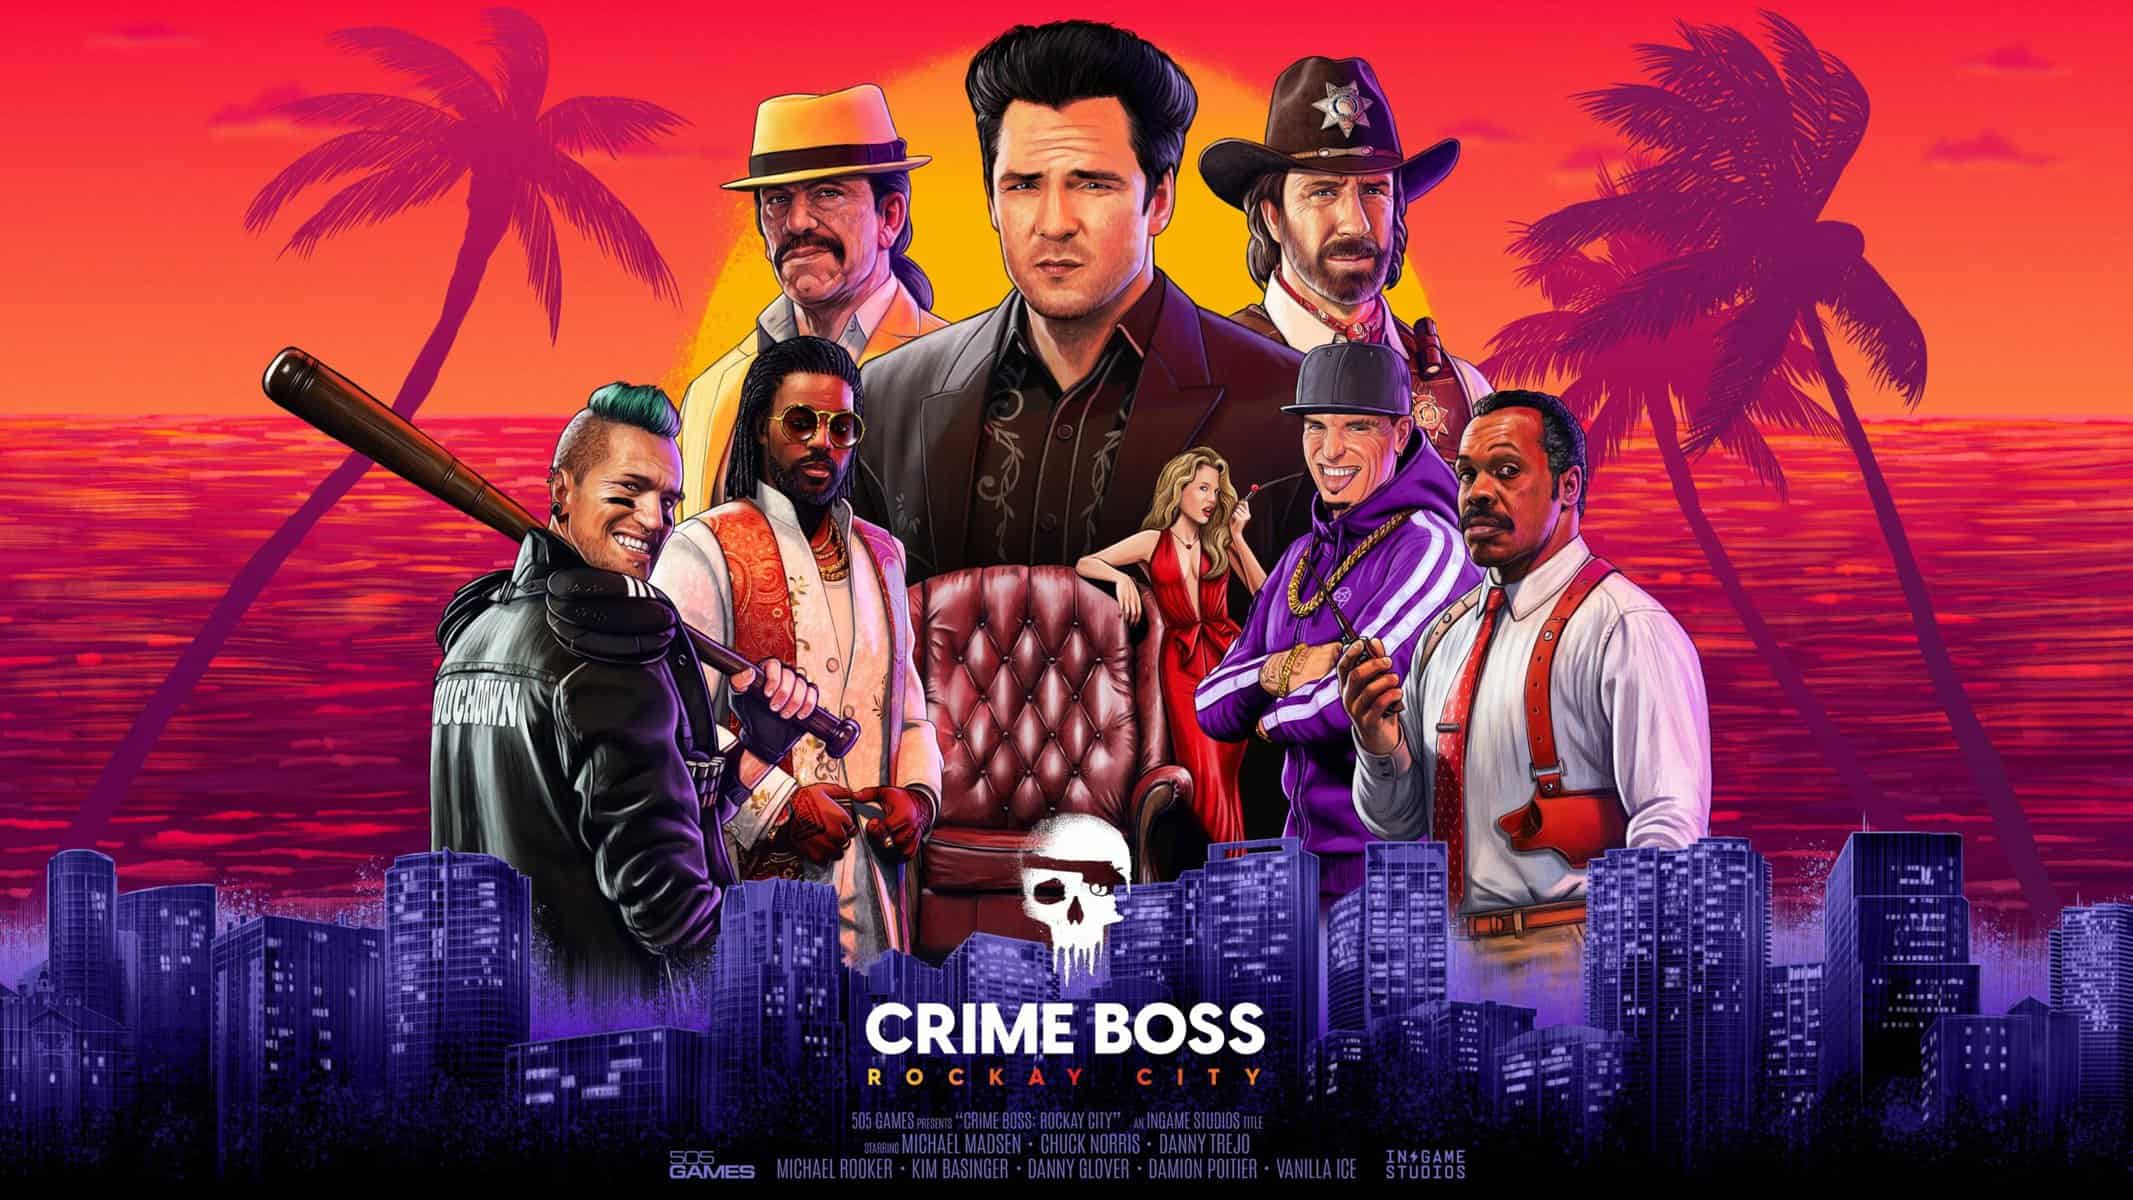 download Crime Boss: Rockay City